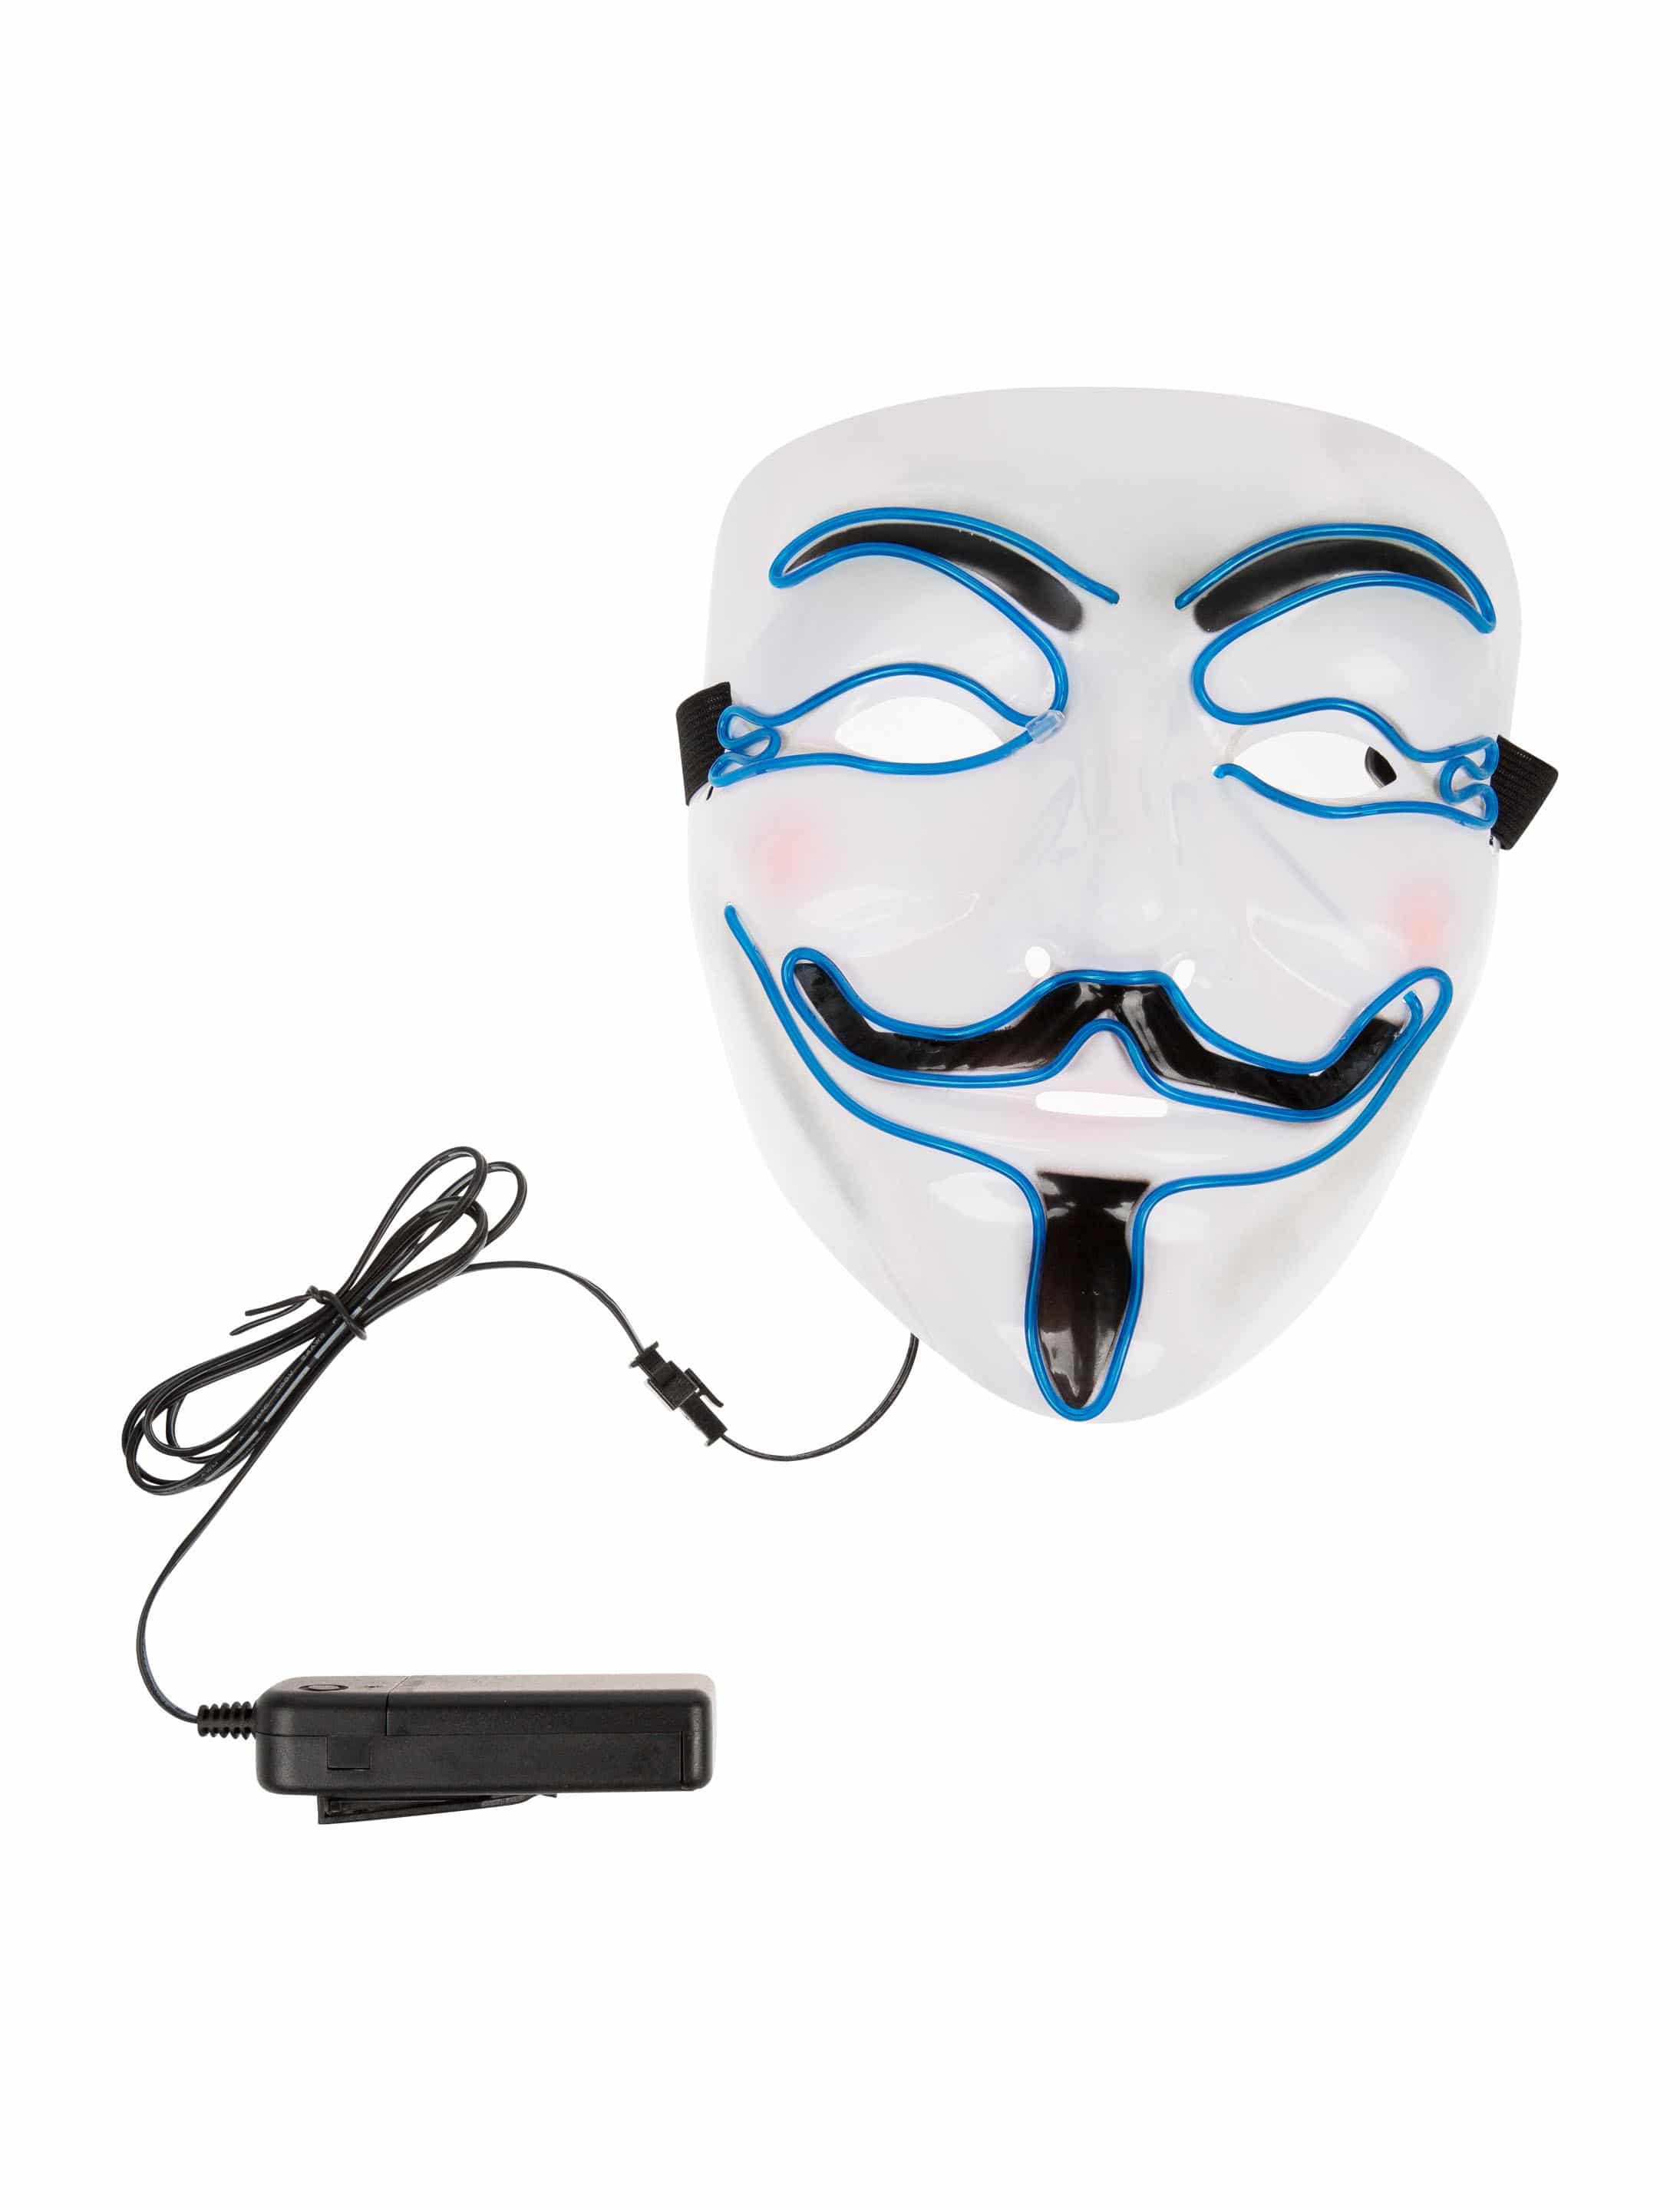 LED Maske Anonym